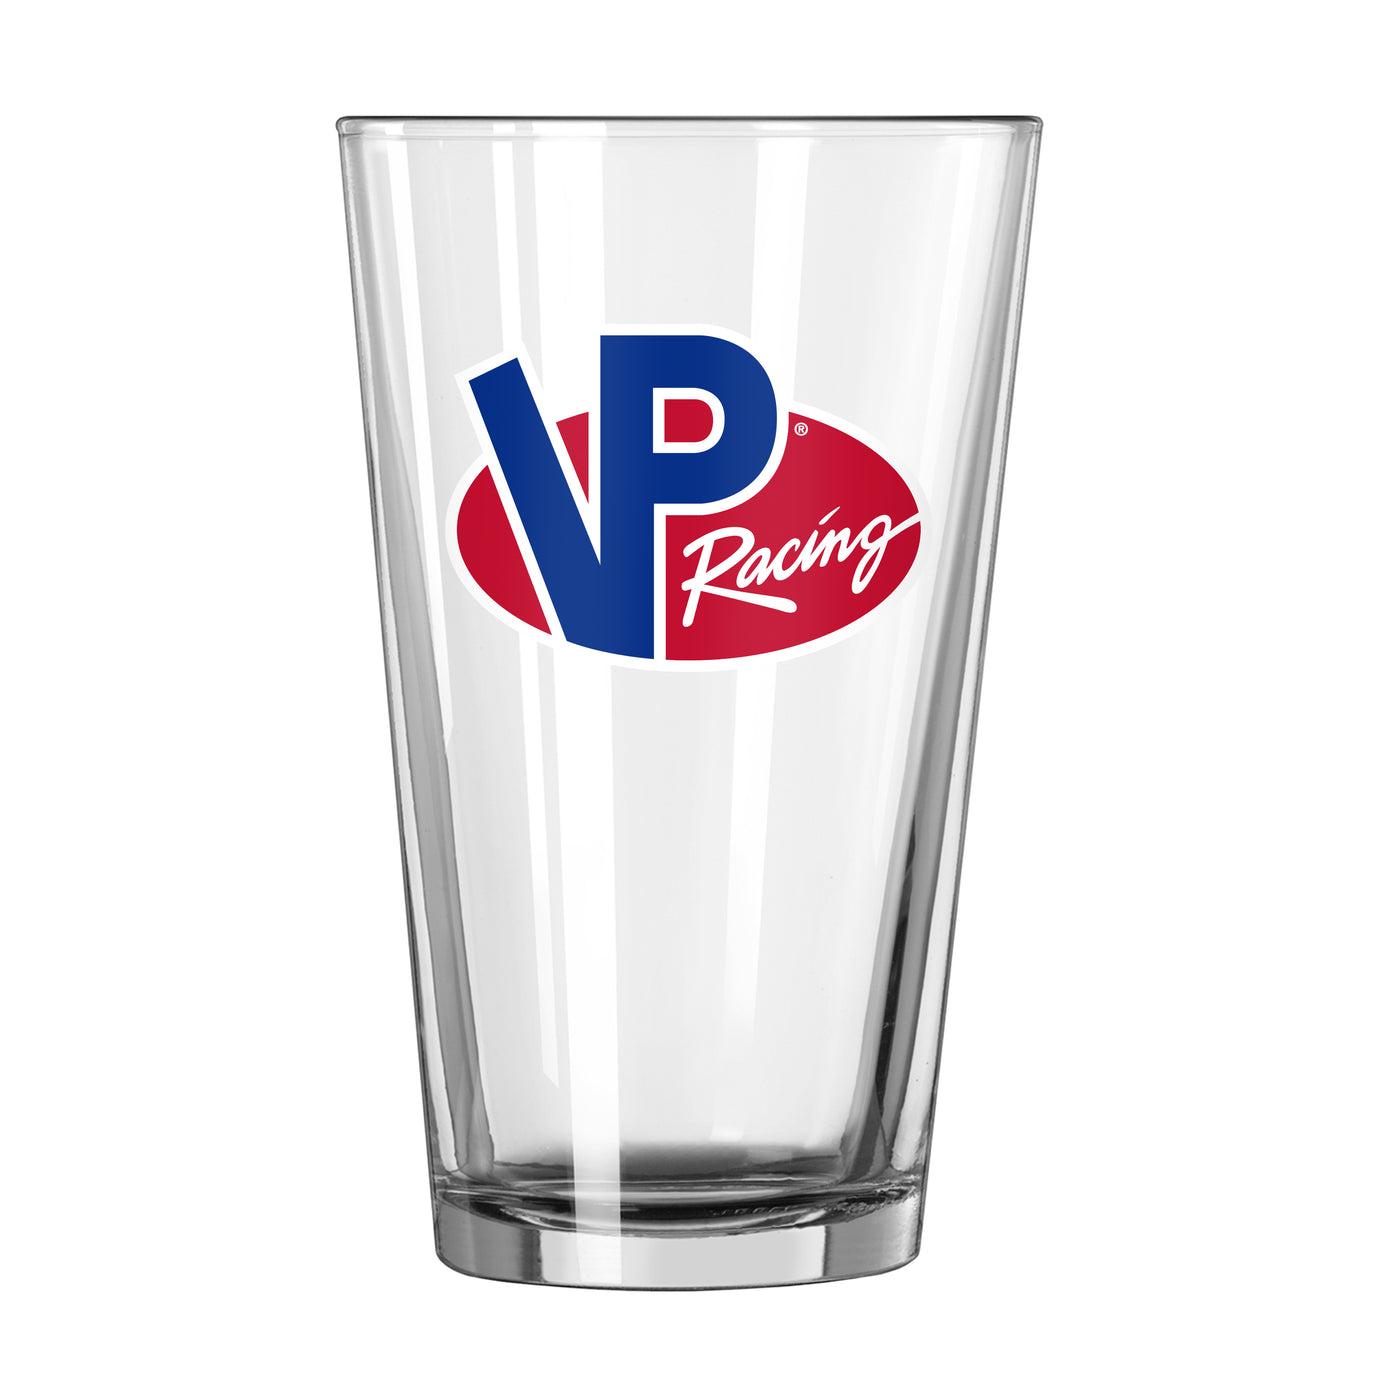 VP Racing 16oz Pint Glass